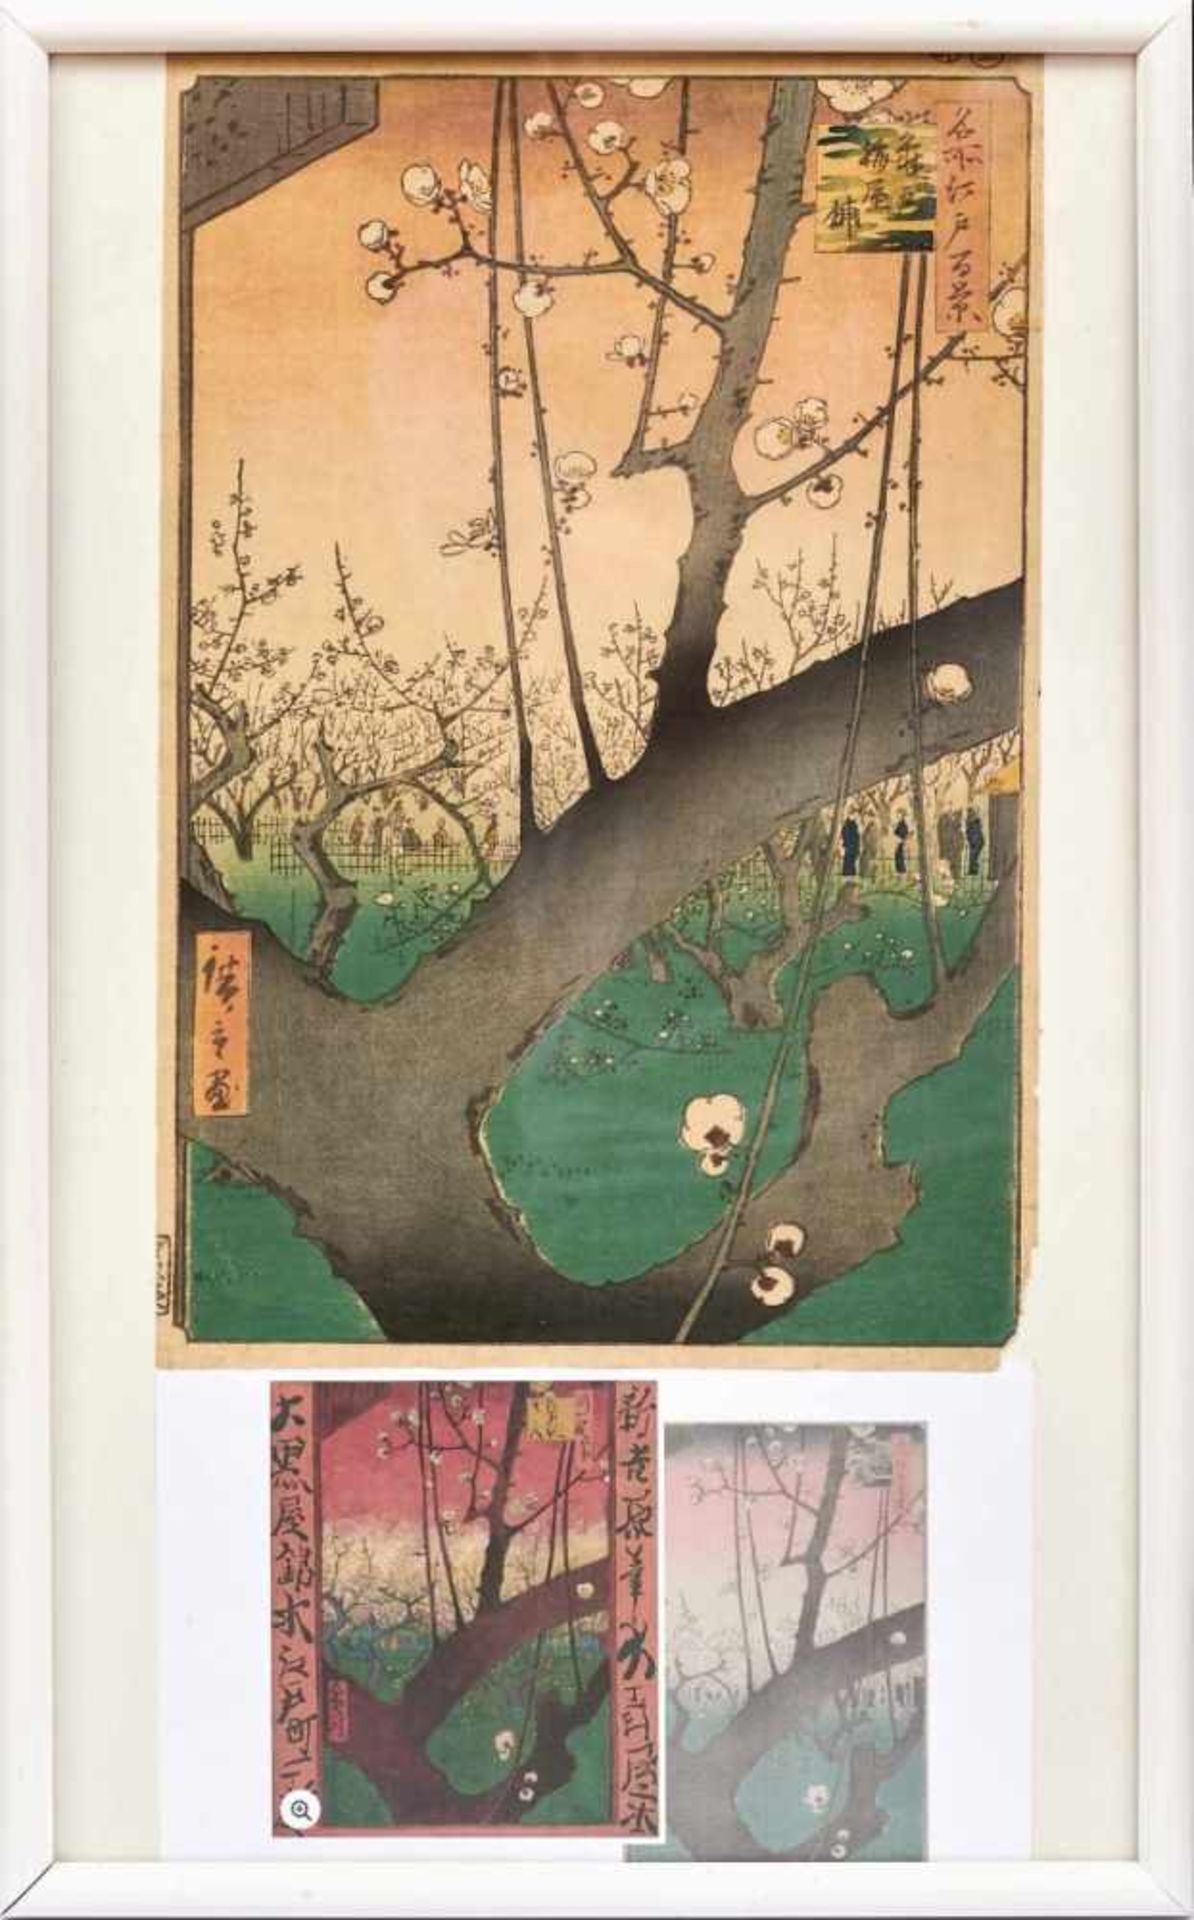 Utagawa (Ando) HiroshigeDer Pflaumengarten in Kameido (Kameido Umeyashiki) aus der Serie "Hundert